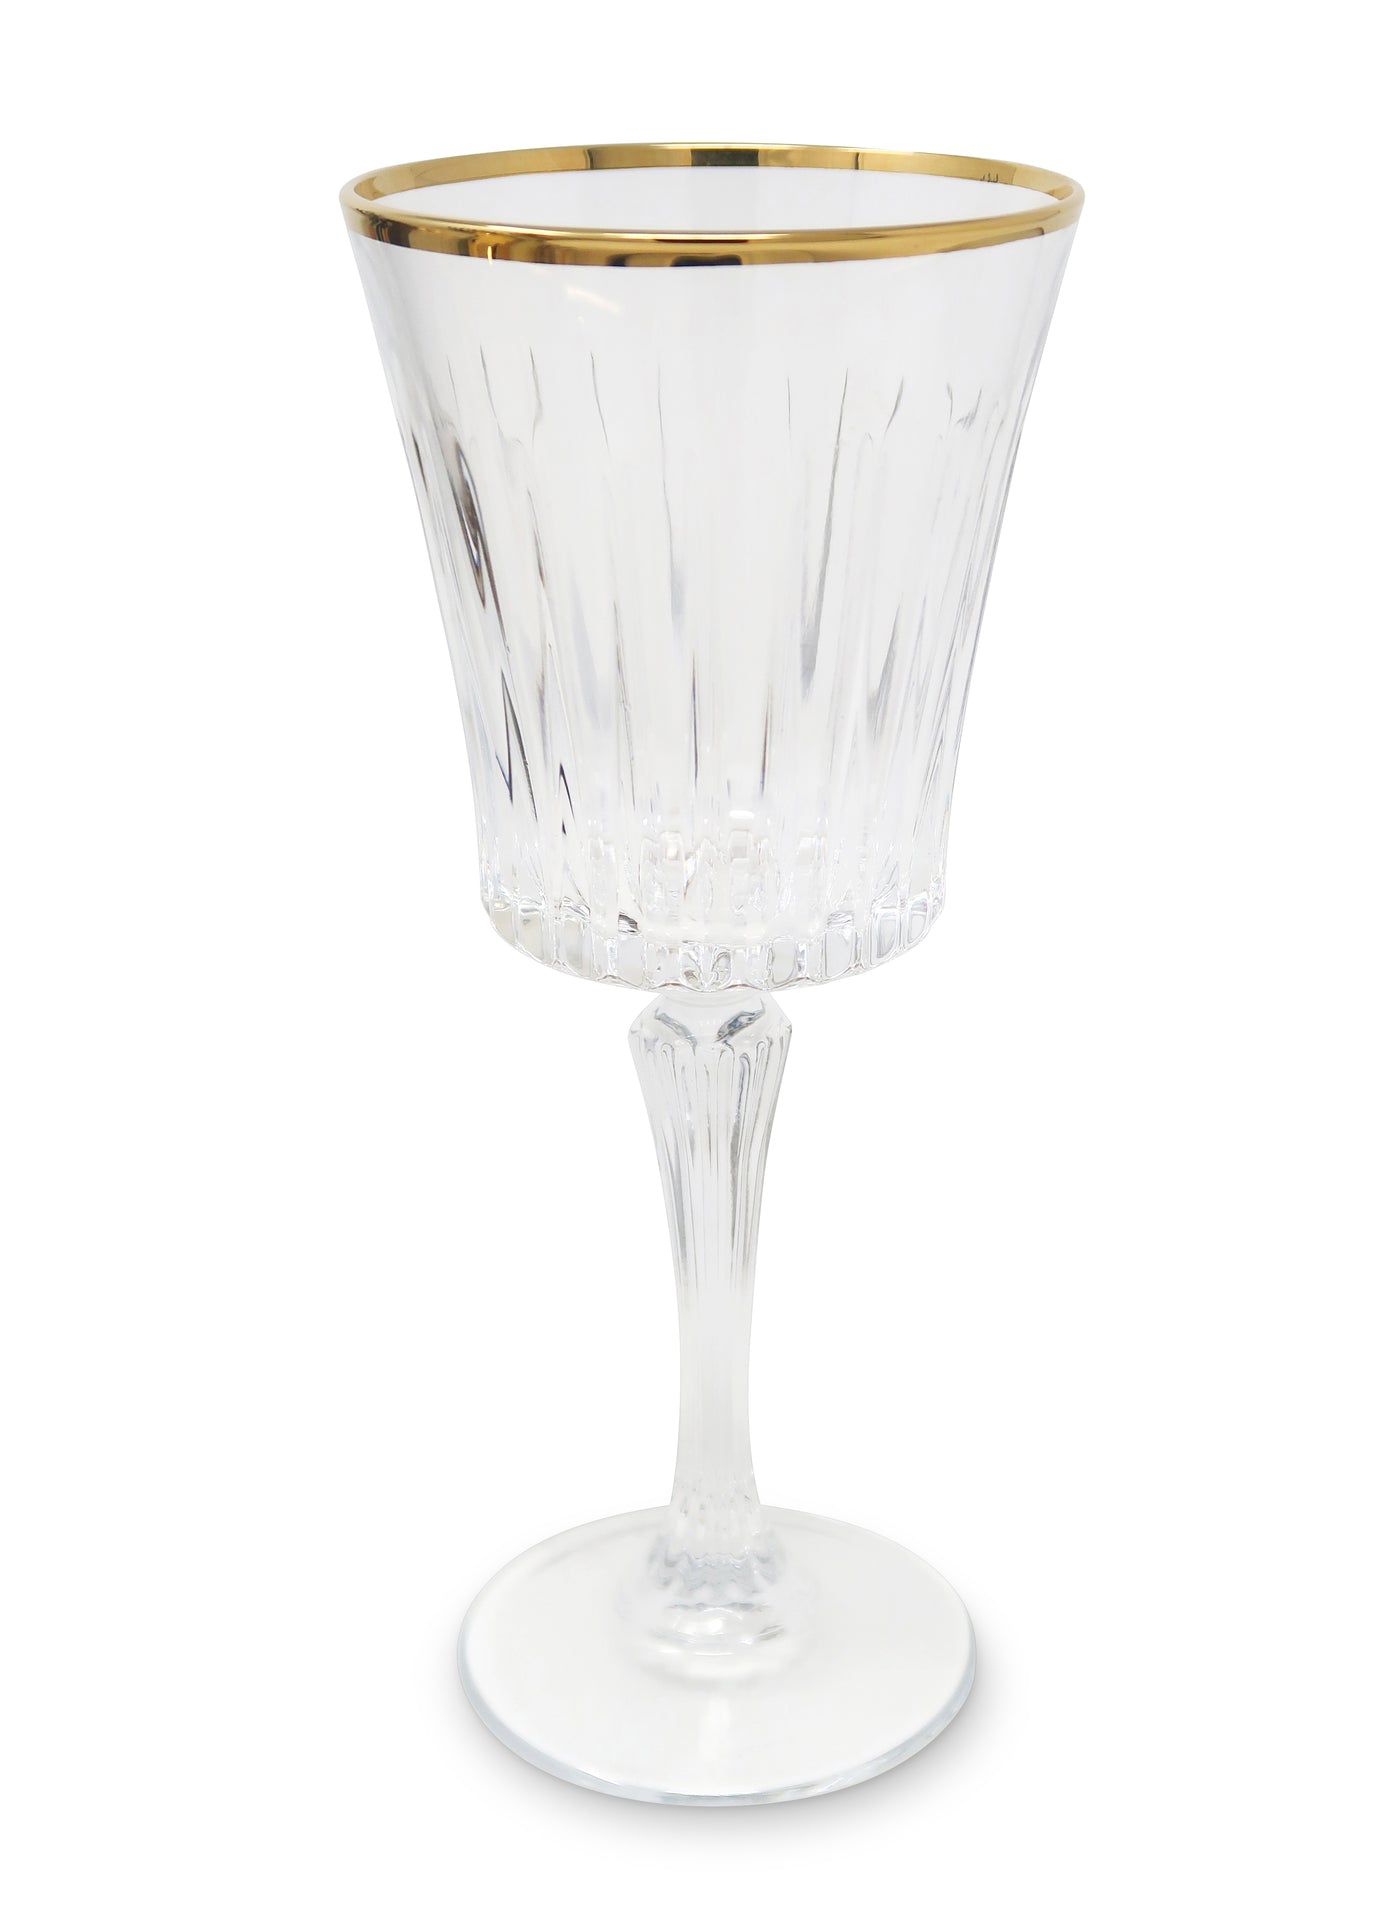 Liscio Ottico - Set of 6 Water Glasses with Linear Design